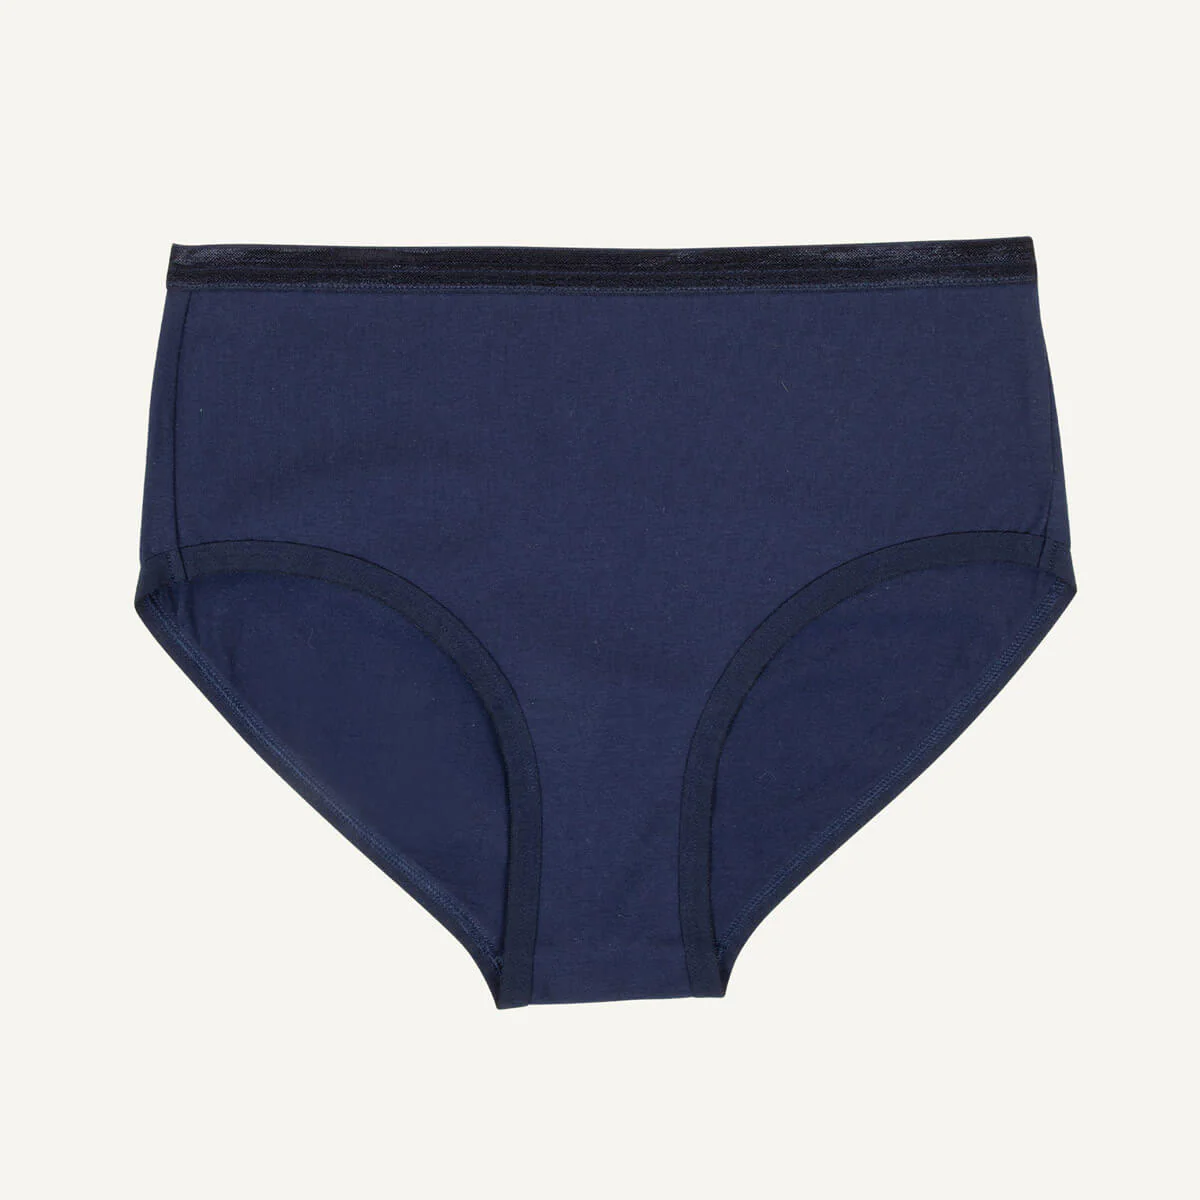 Mrat Seamless Lingerie High-waisted Briefs Smoothing Men's Soft Briefs  Underpants Knickers Shorts Underwear Women's Cotton Underwear Soft 